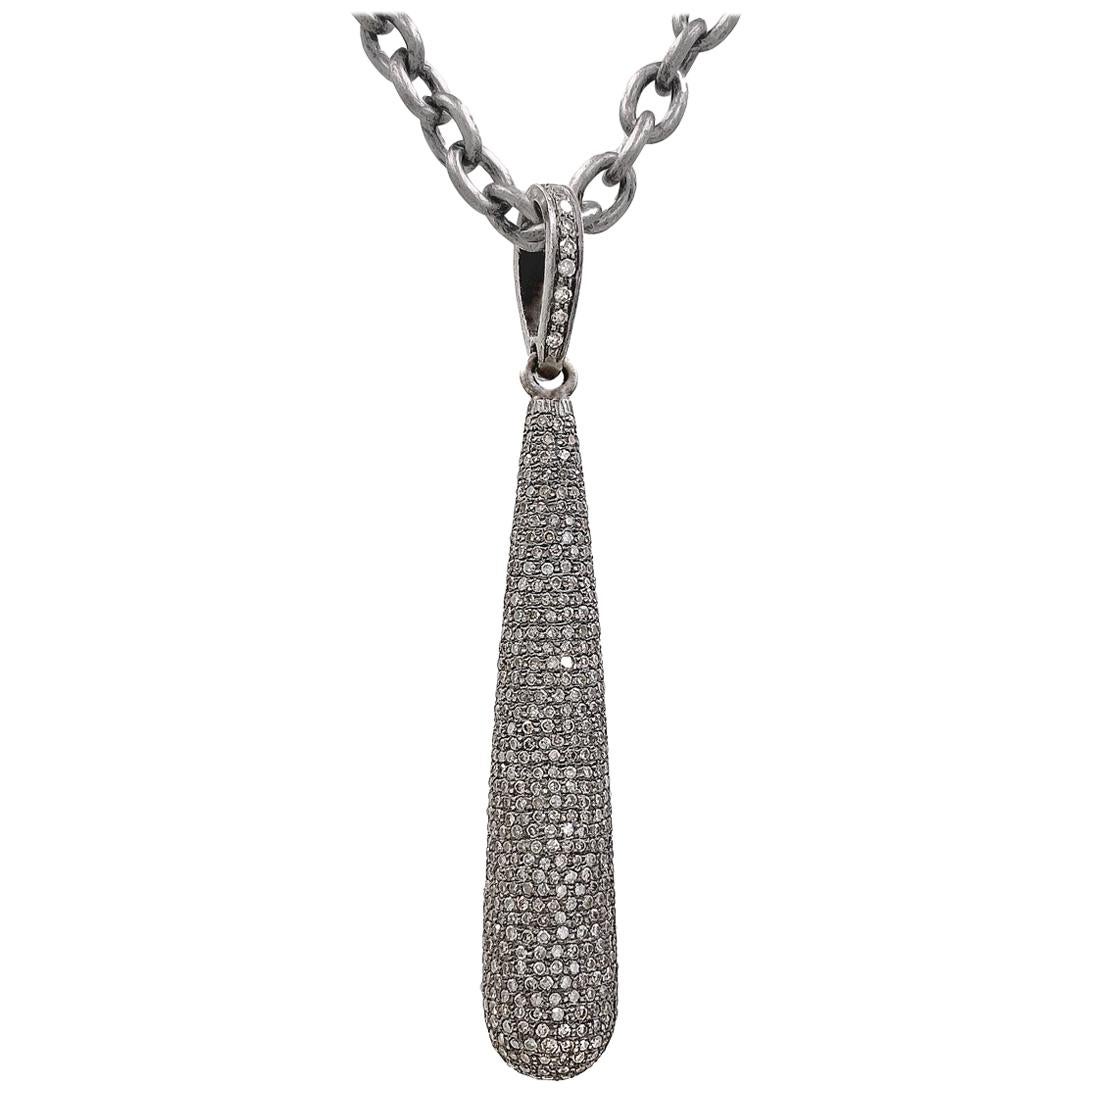 Liza Beth 1.70 Carat Pave Diamond Drop Long Layering Necklace